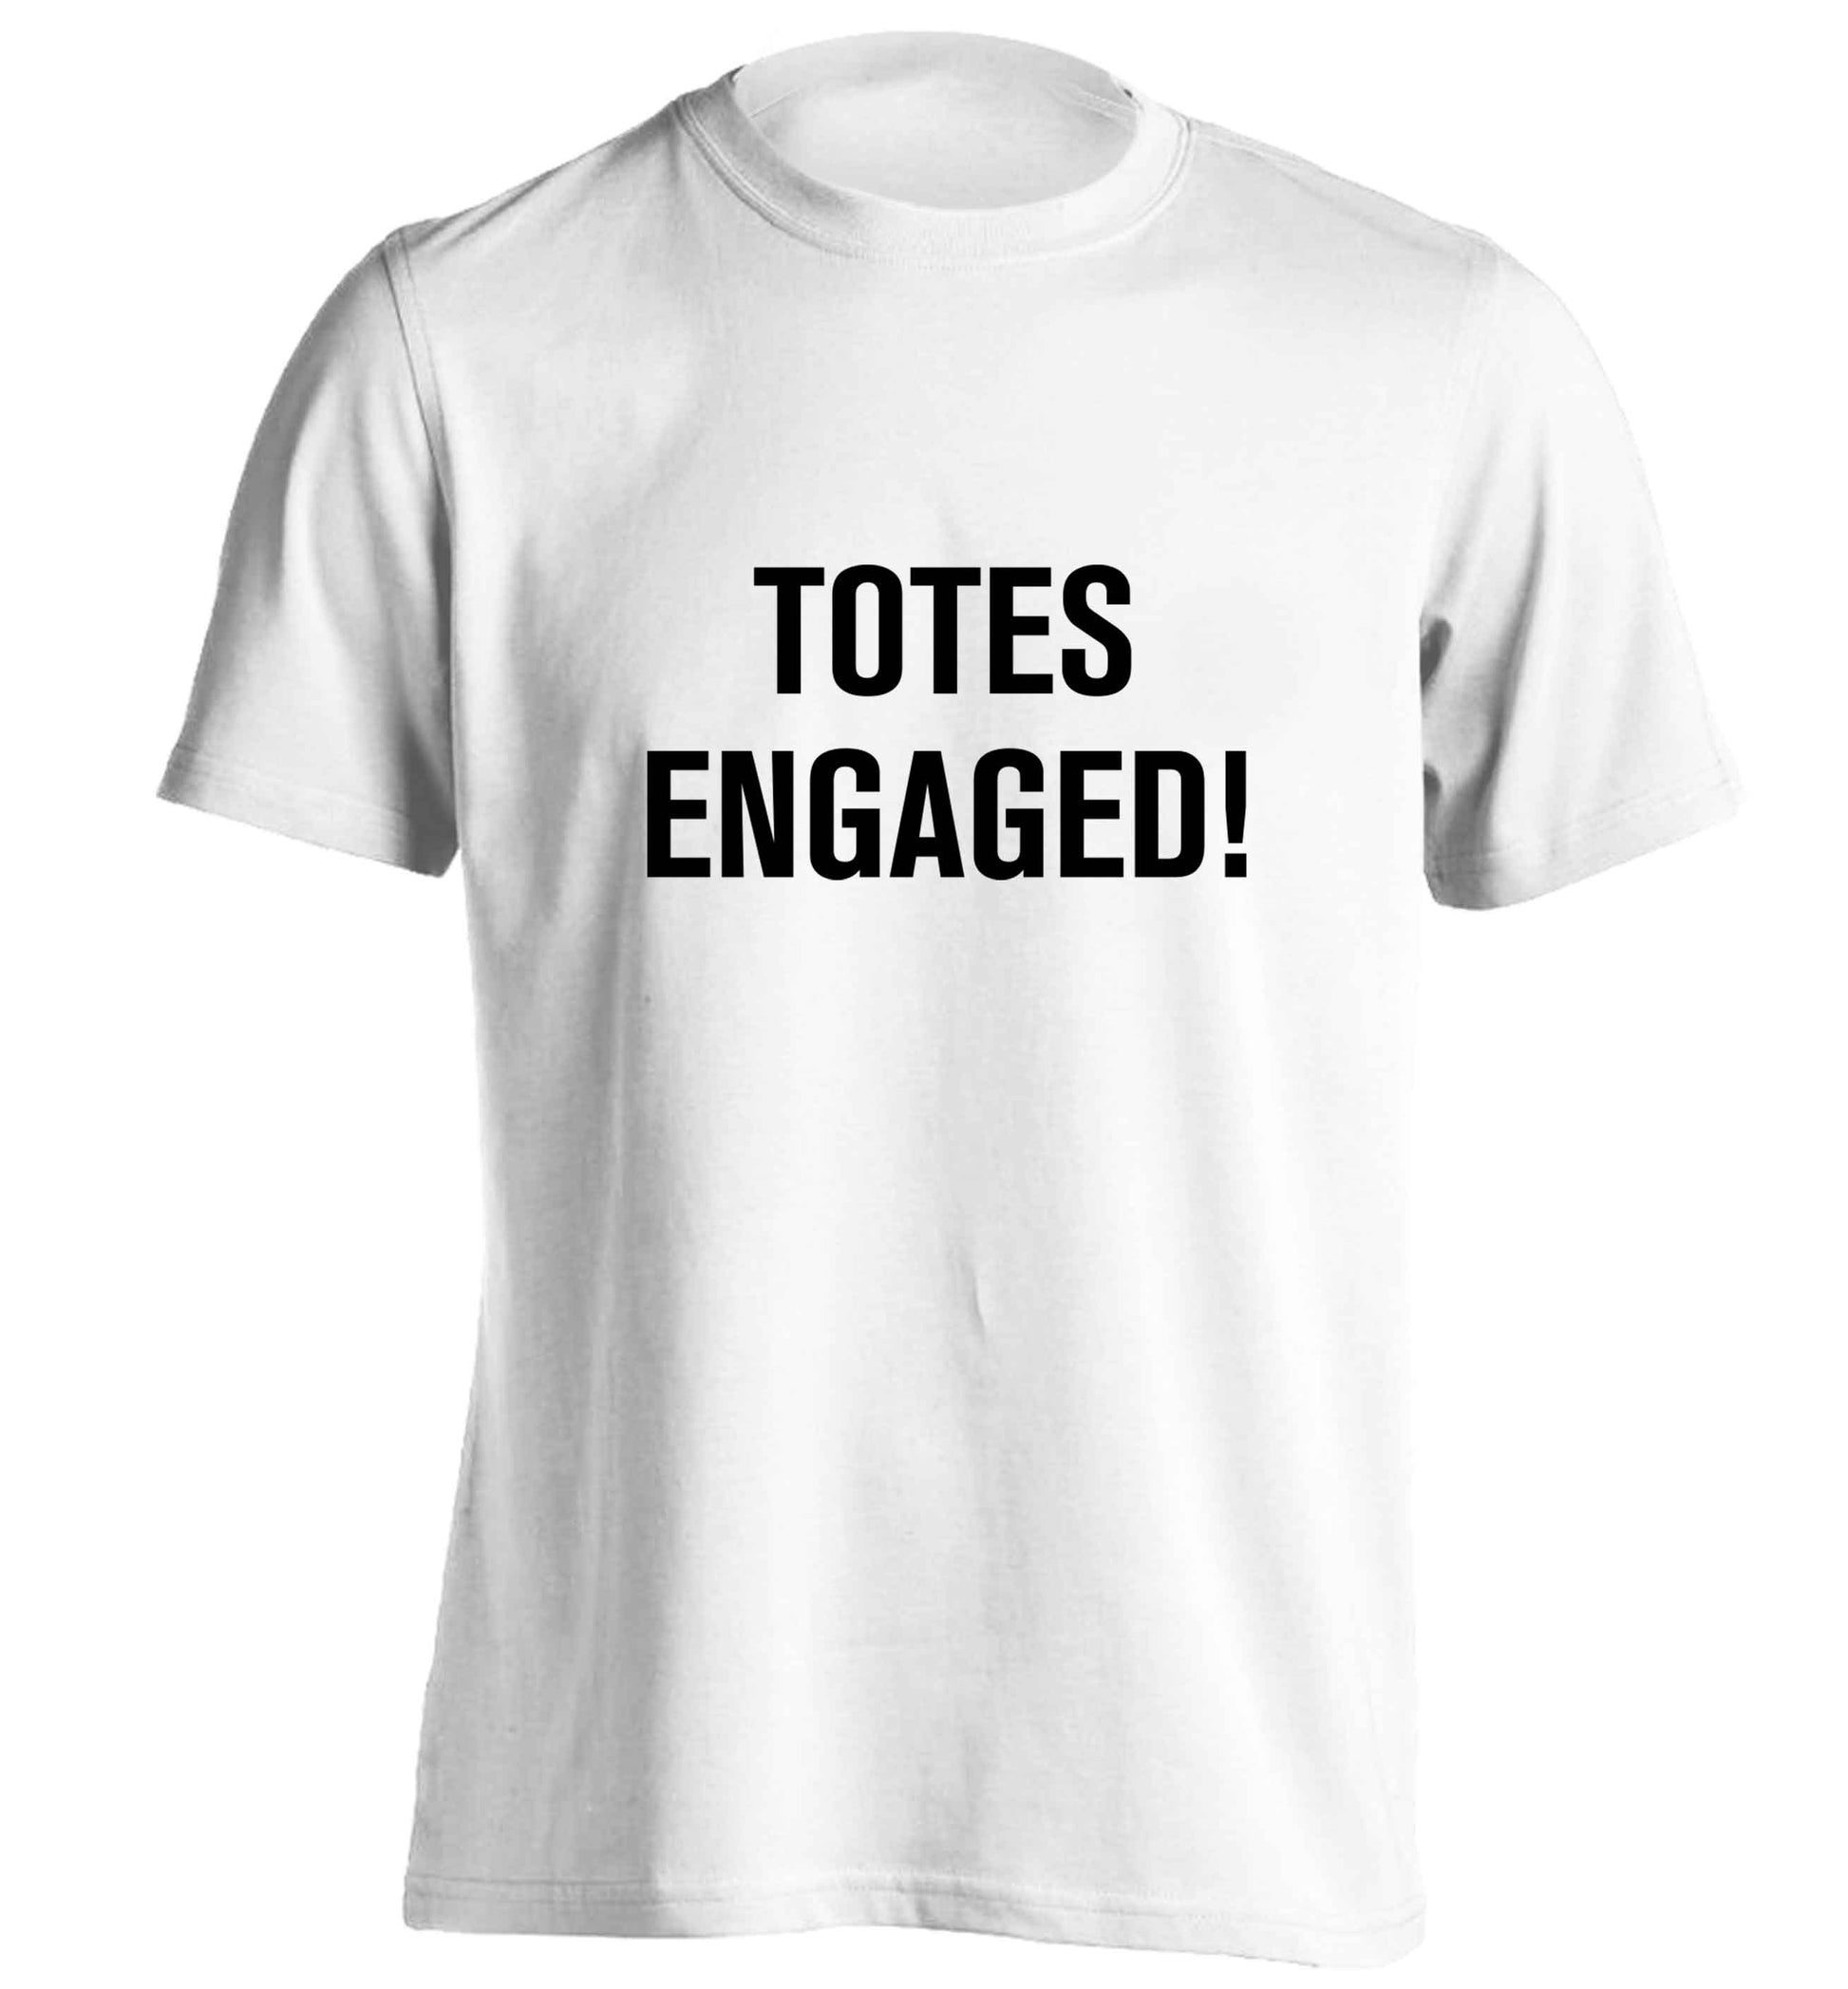 Totes engaged adults unisex white Tshirt 2XL